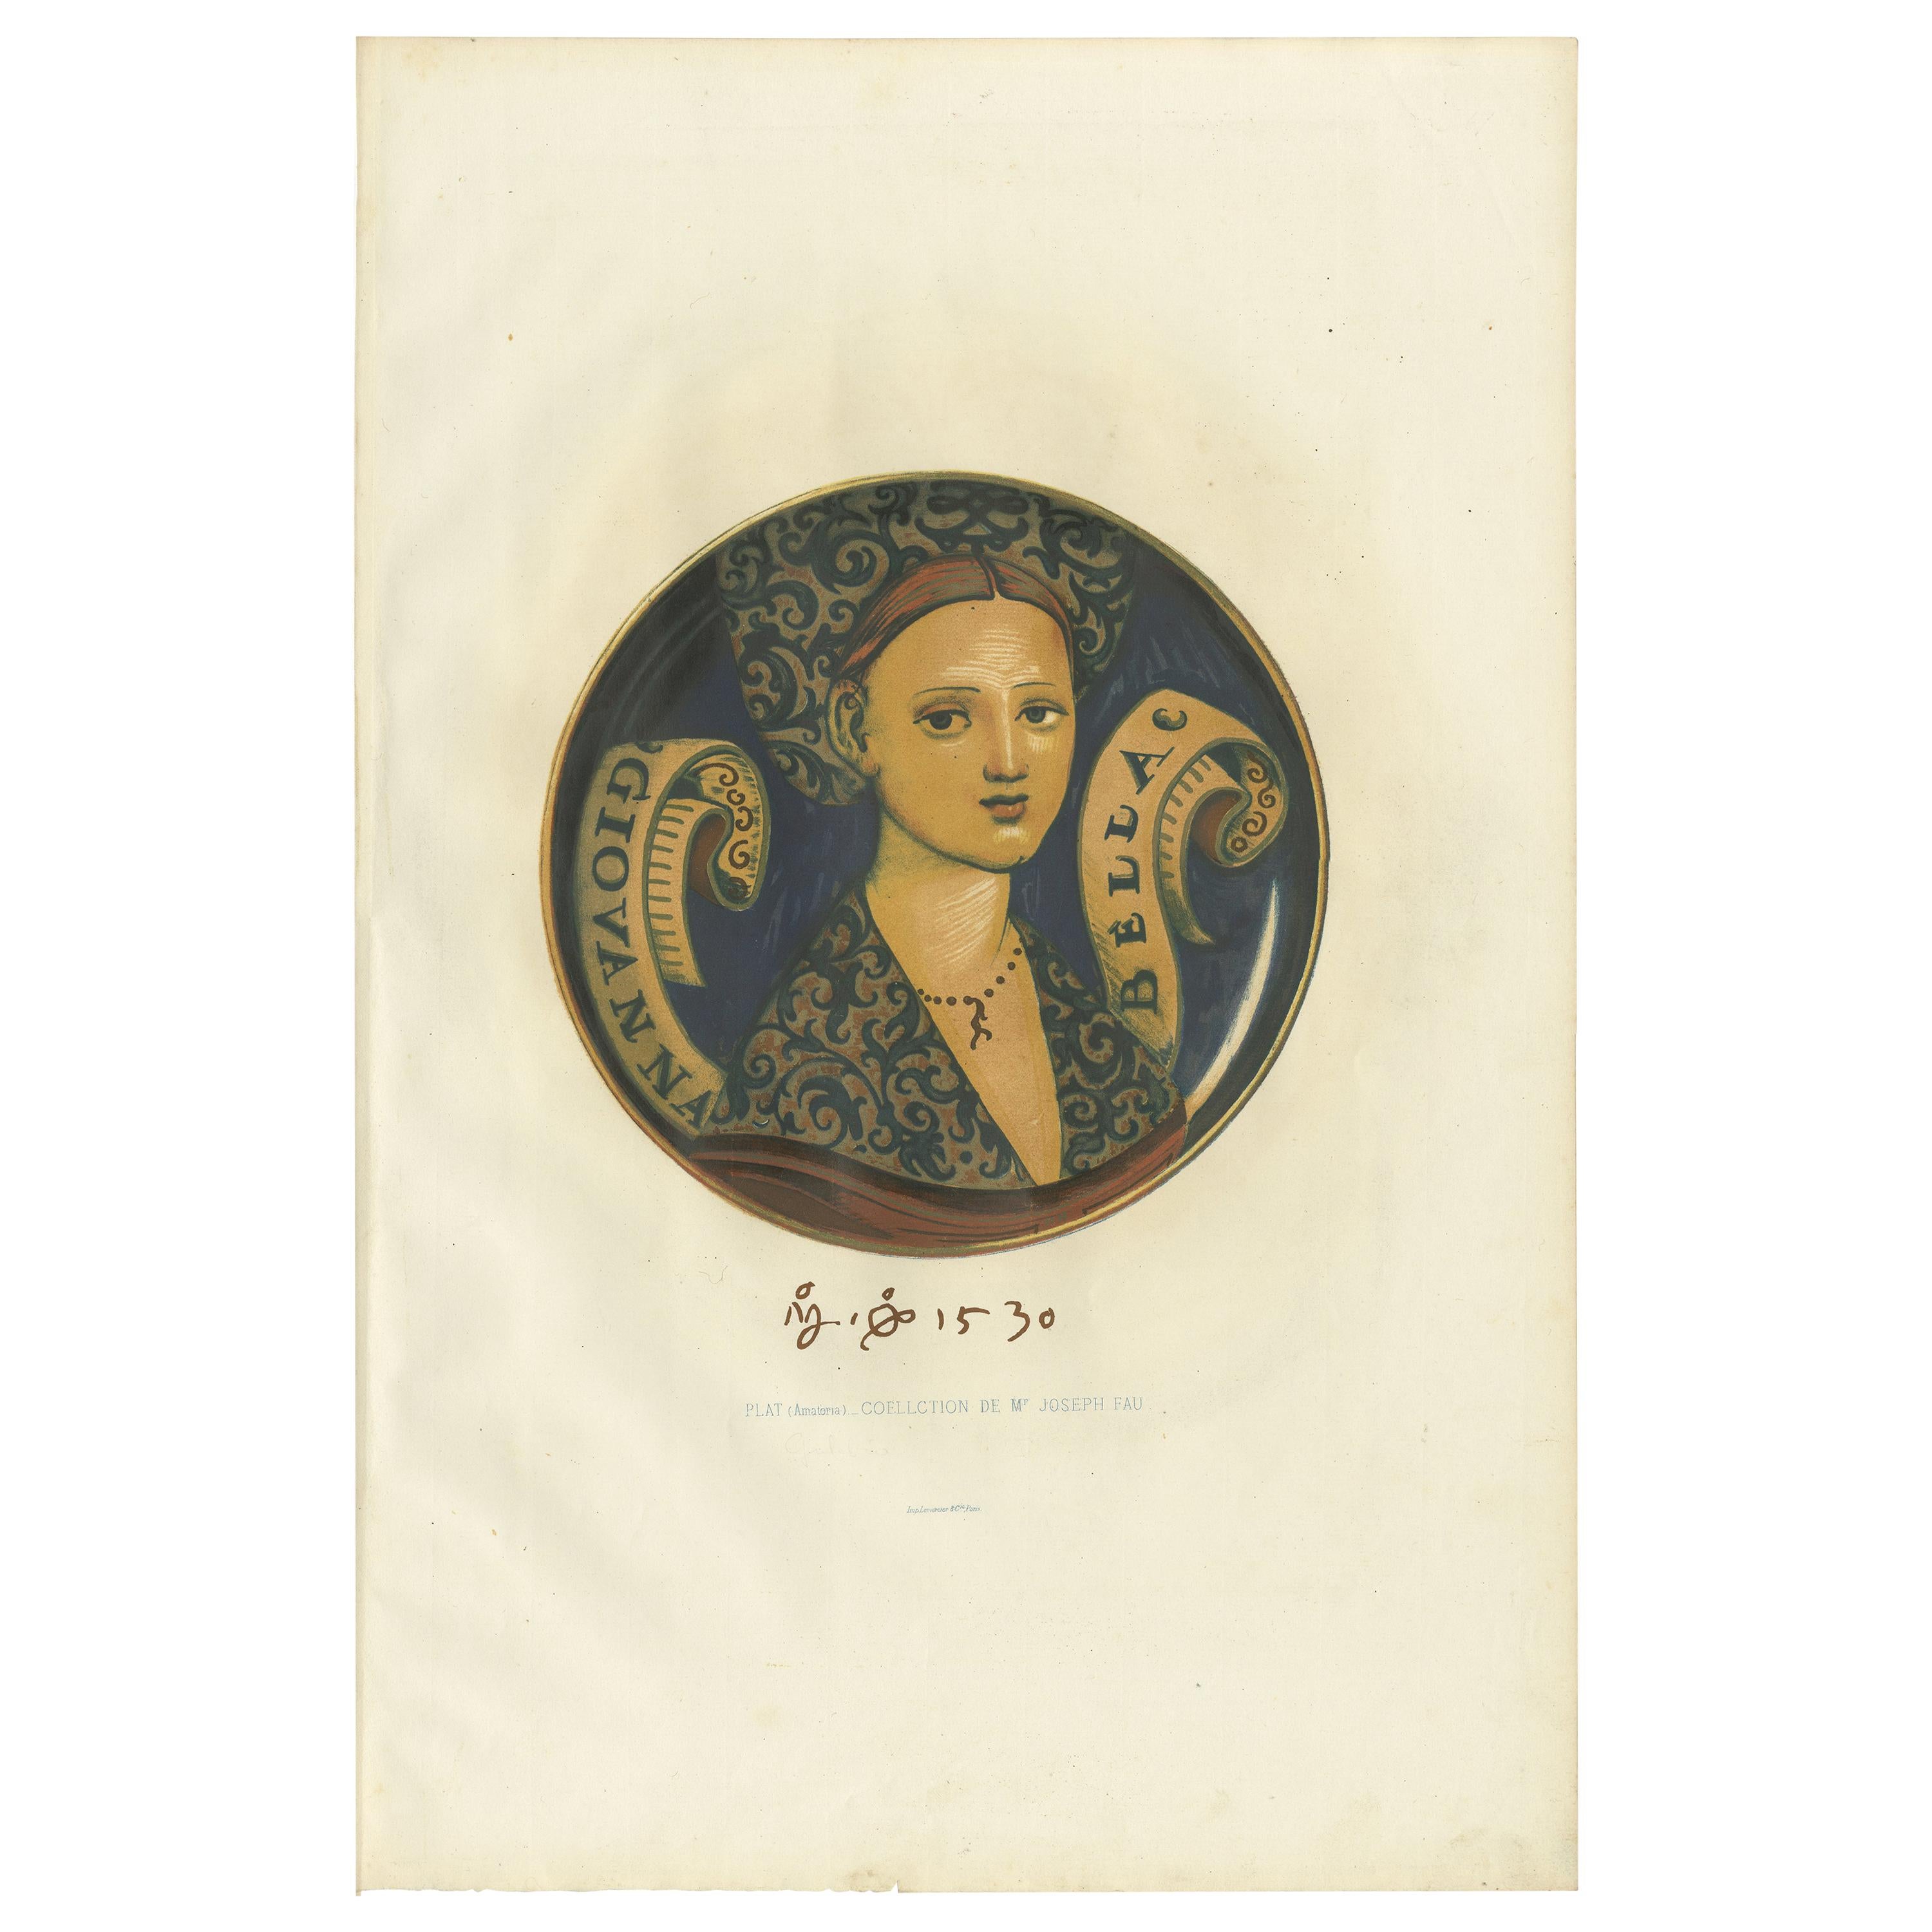 Antique Print of a Plate 'Amatoria' of Mr. Joseph Fau by Delange '1869' For Sale